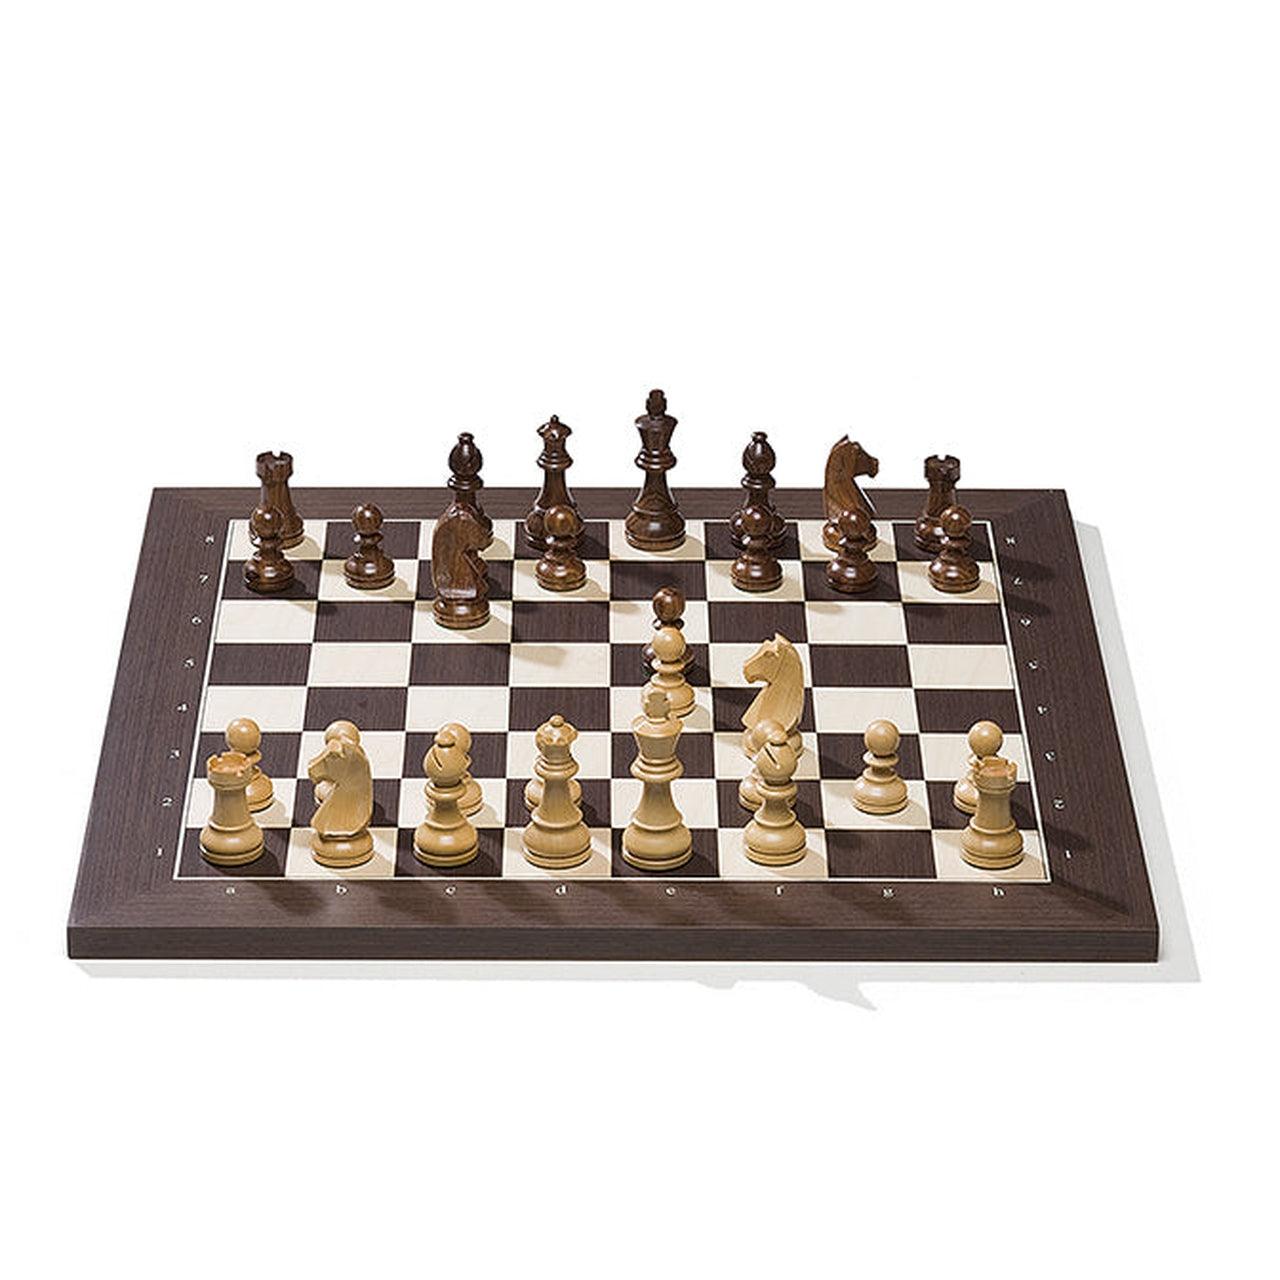 DGT Electronic USB Chess Board + DGT Chess Pieces TIMELESS